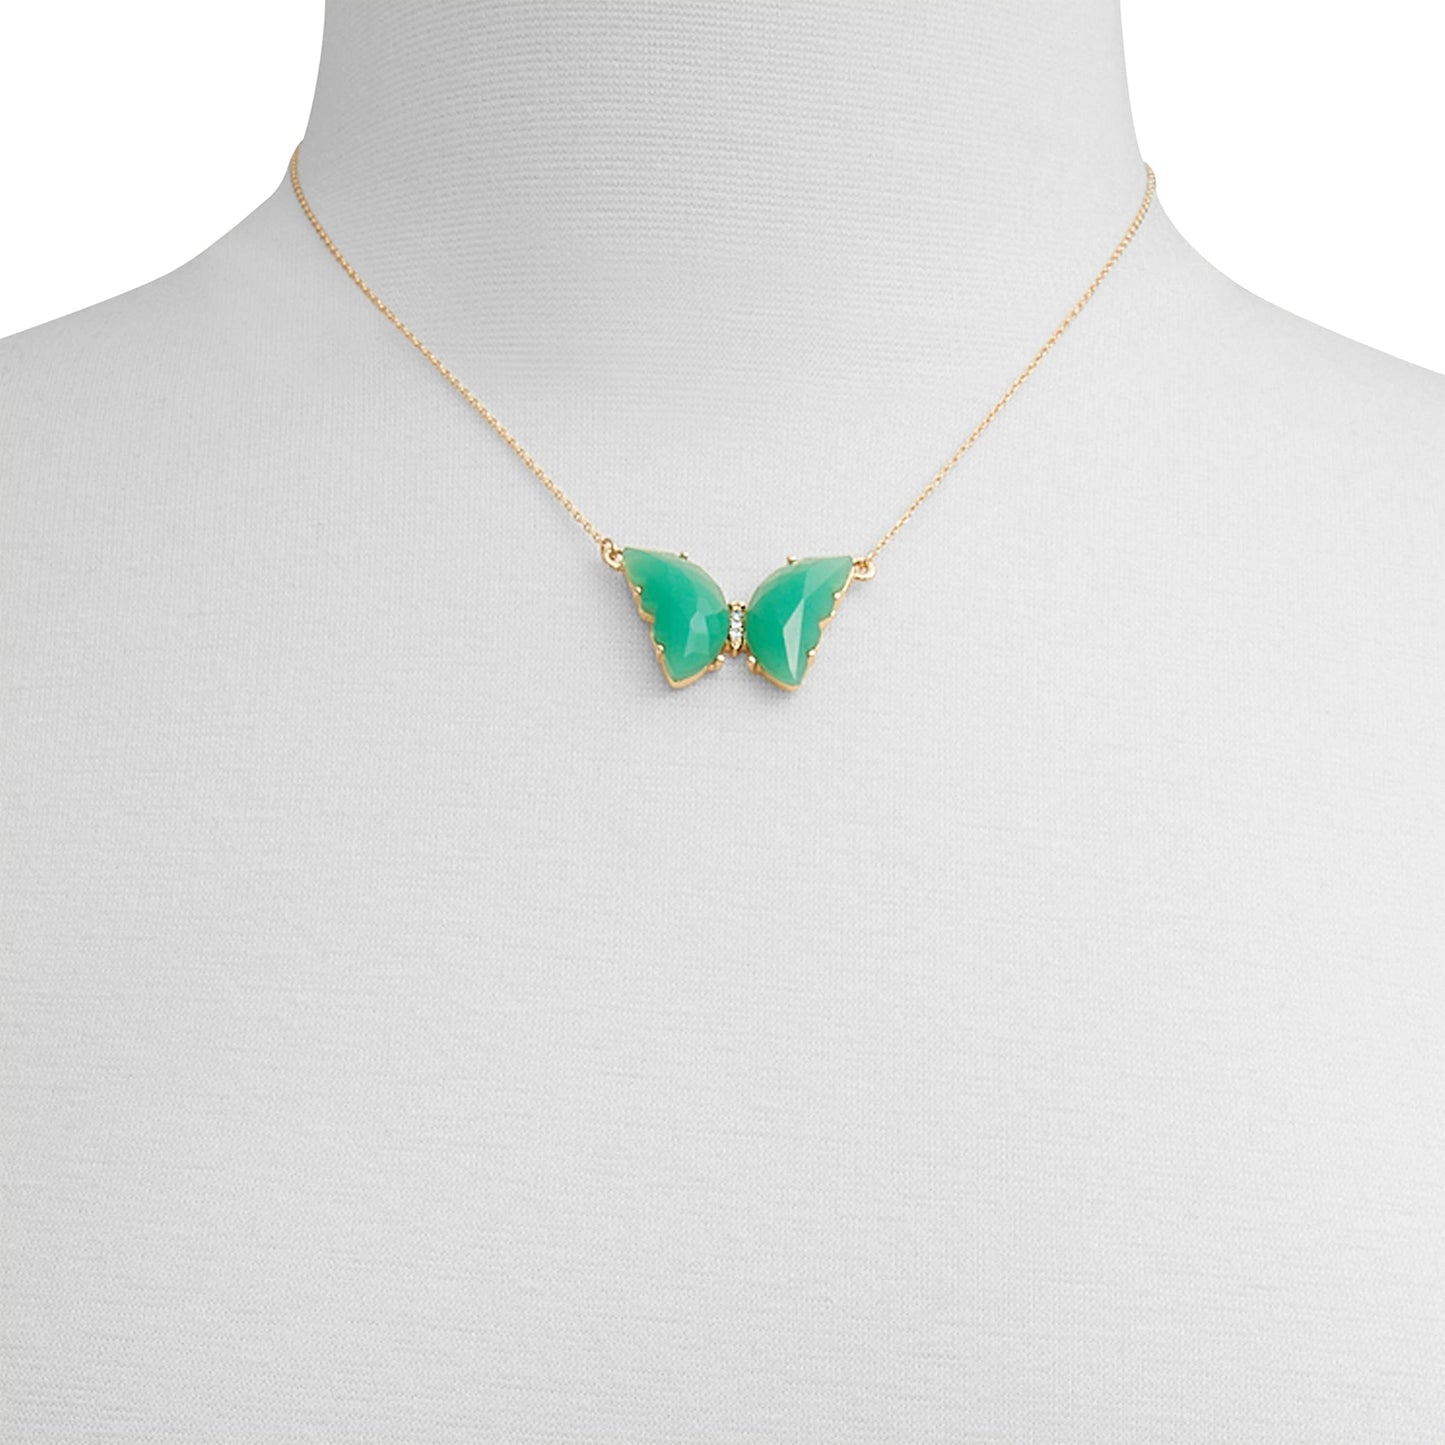 Aldo Women's Alereli Necklace, Green